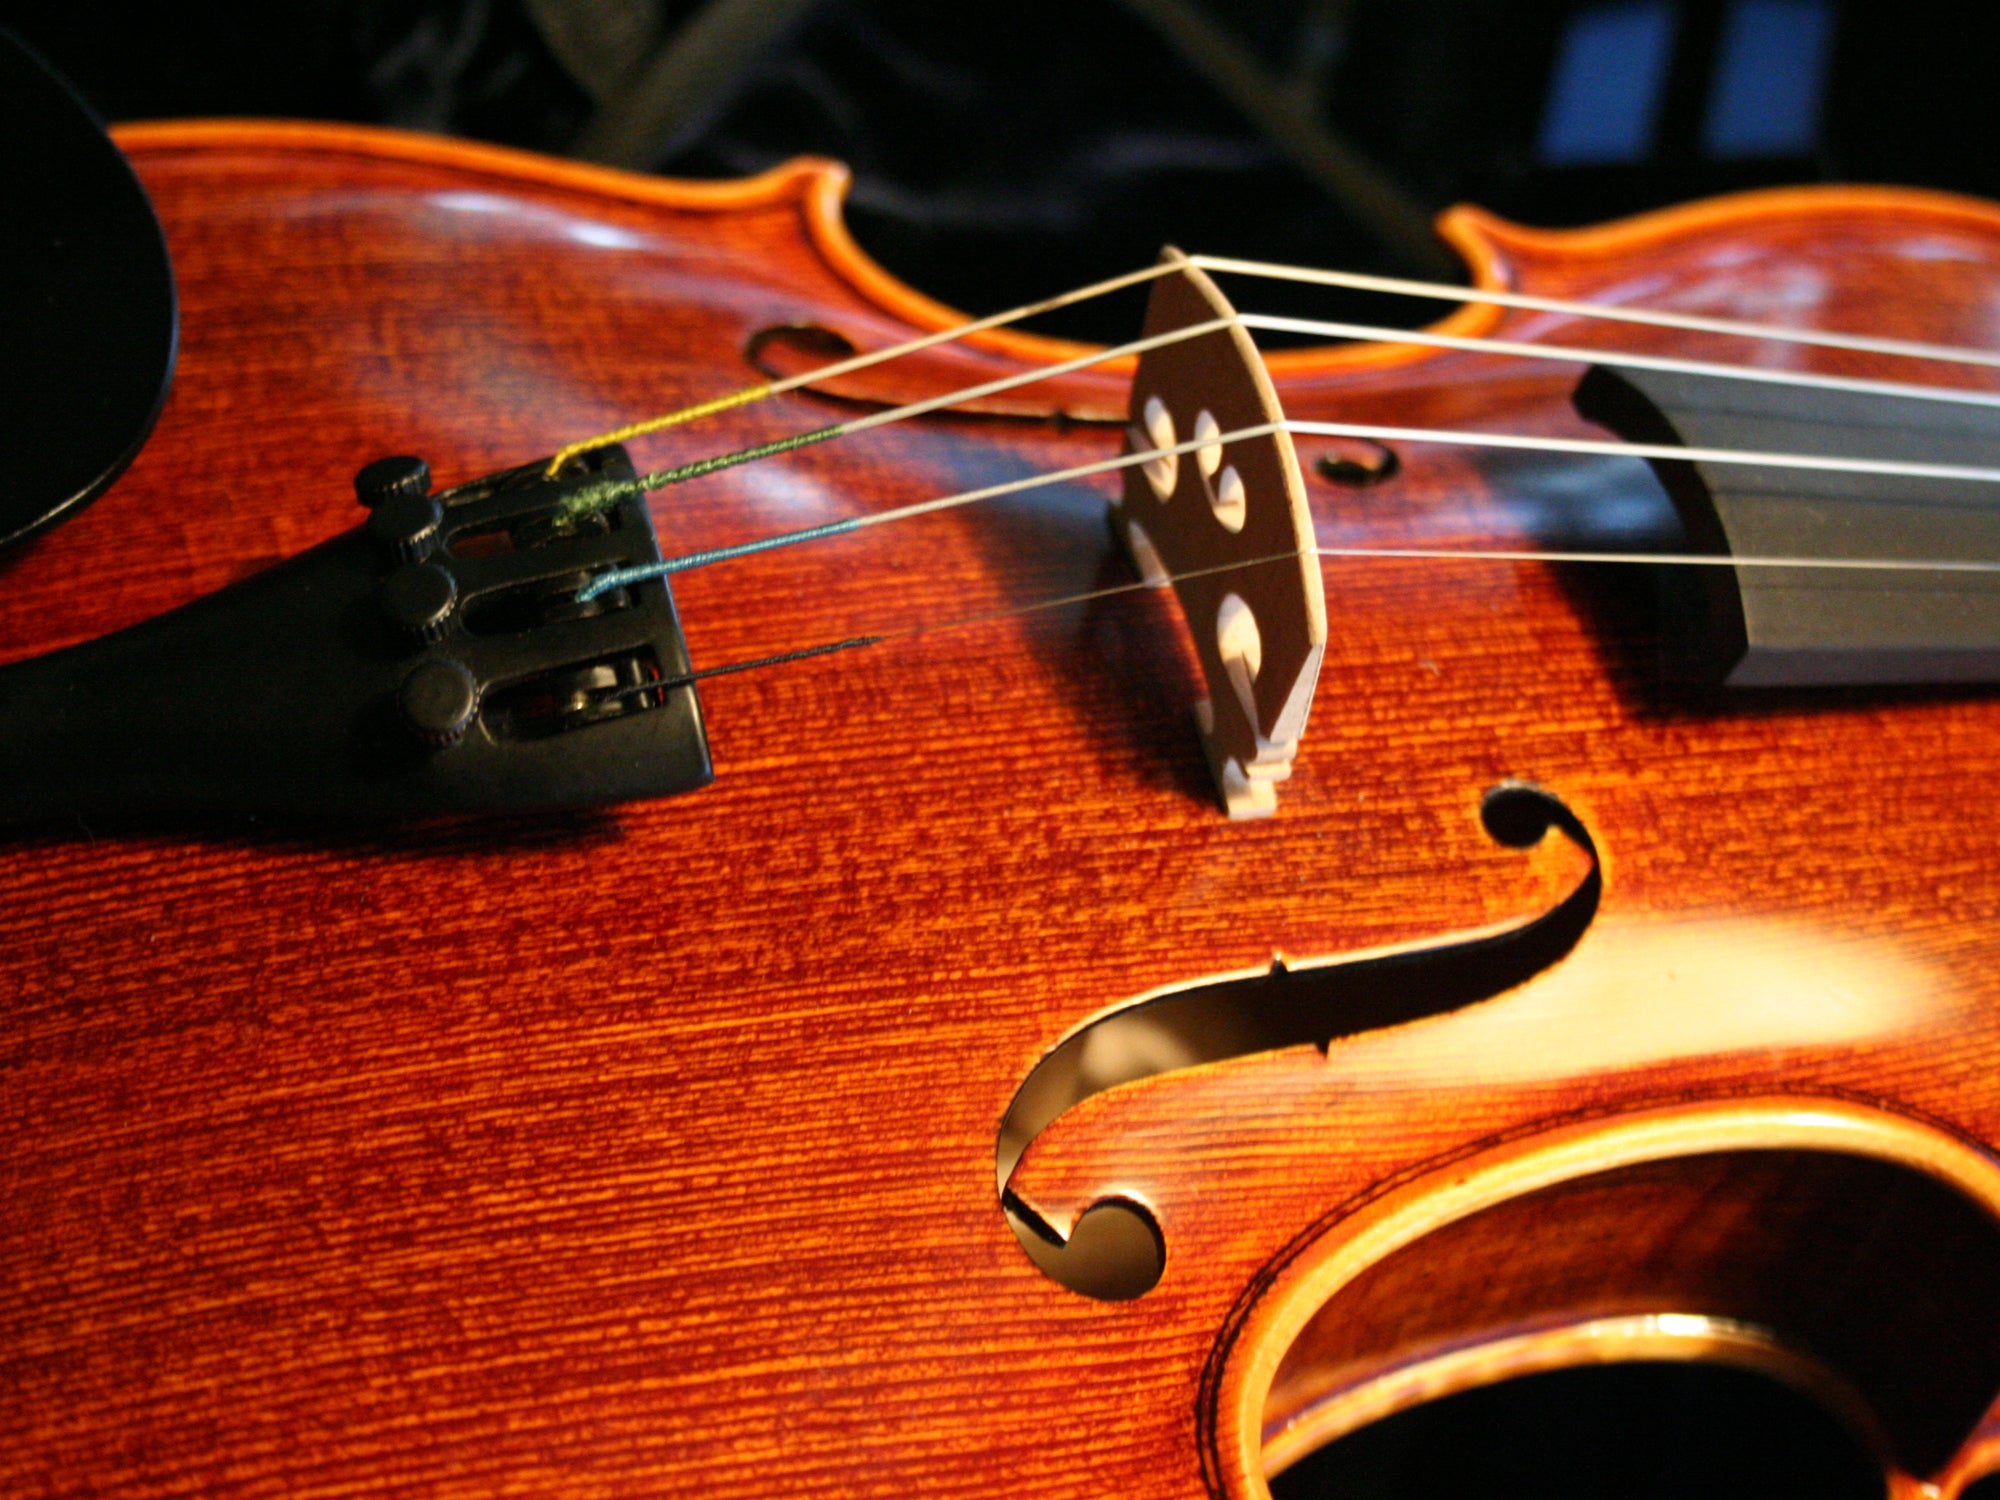 Violin makers extraordinaire